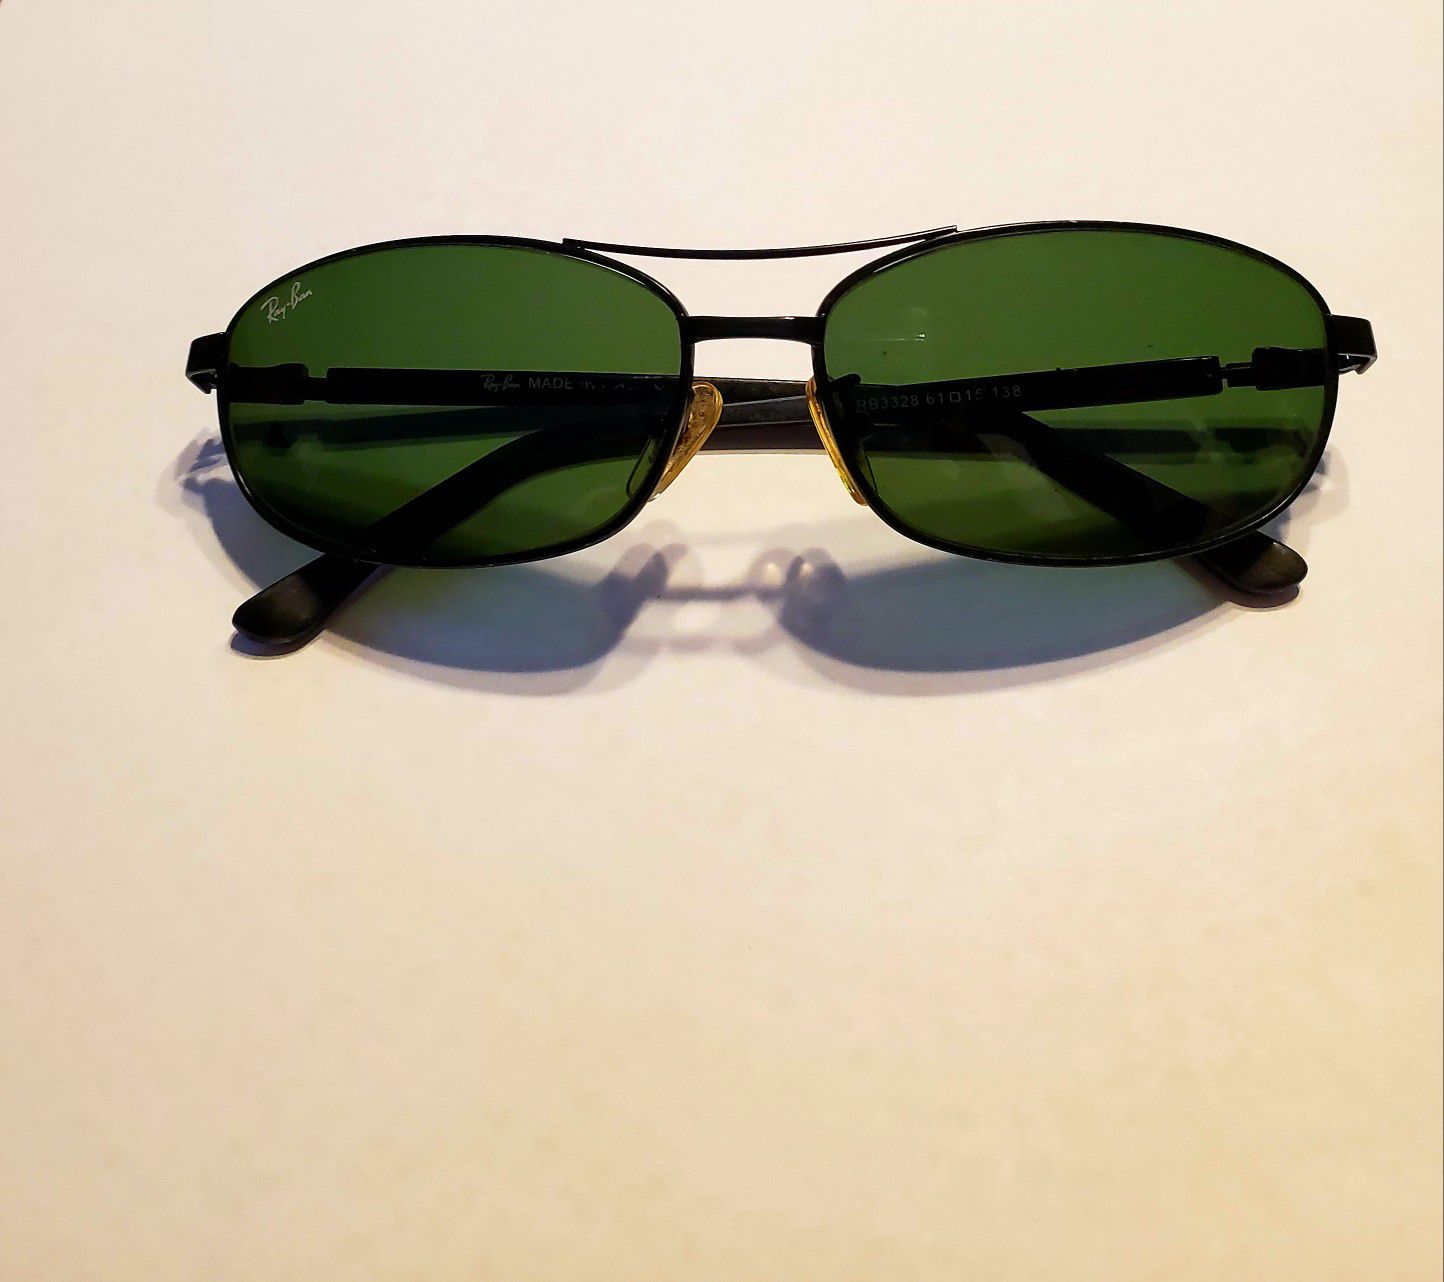 Original Ray - Ban sunglasses